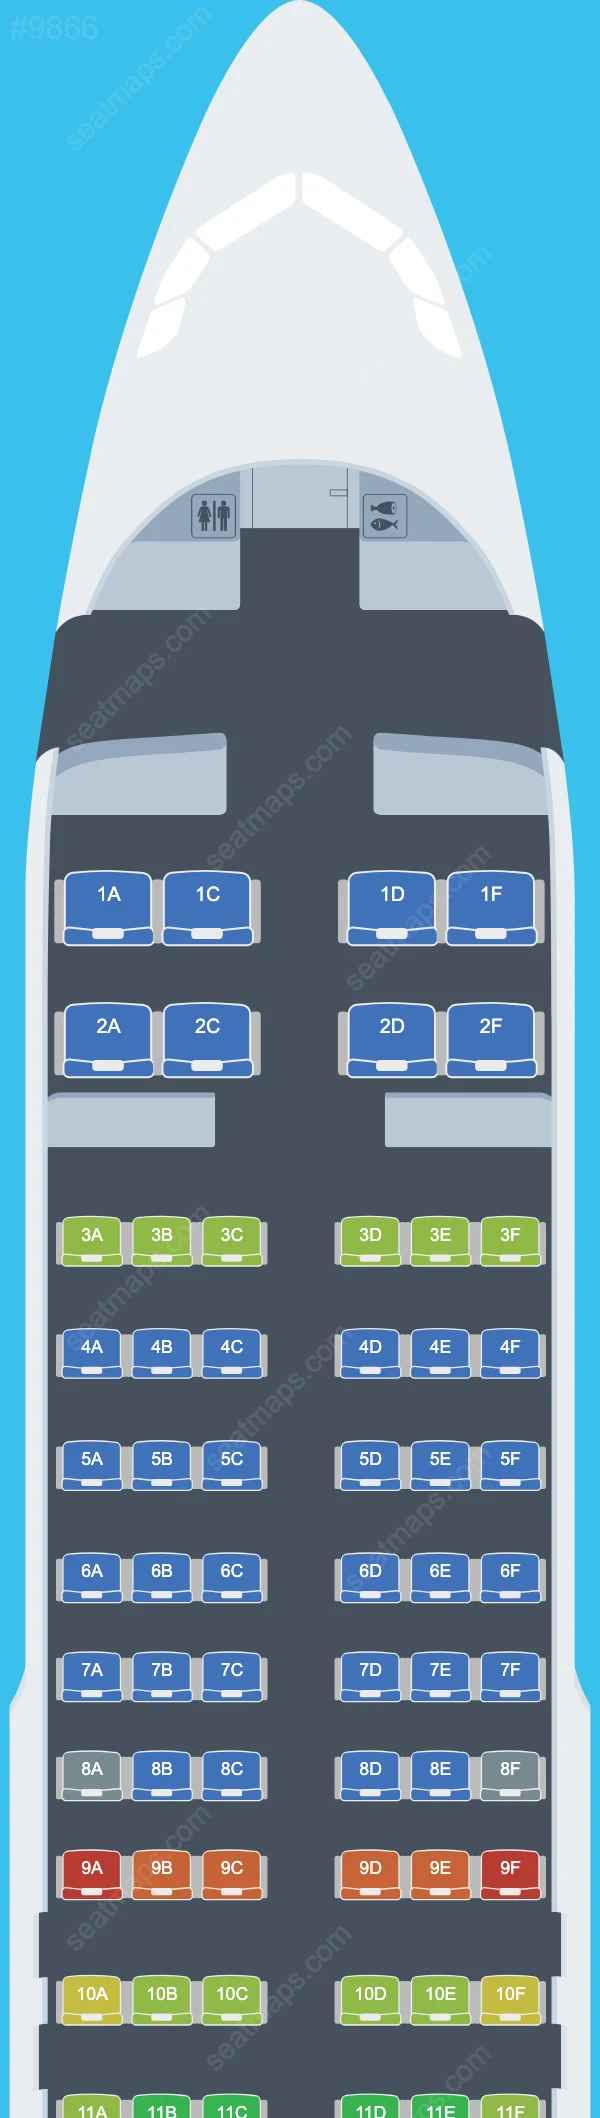 Vistara Airbus A320 Seat Maps A320-200neo V.1